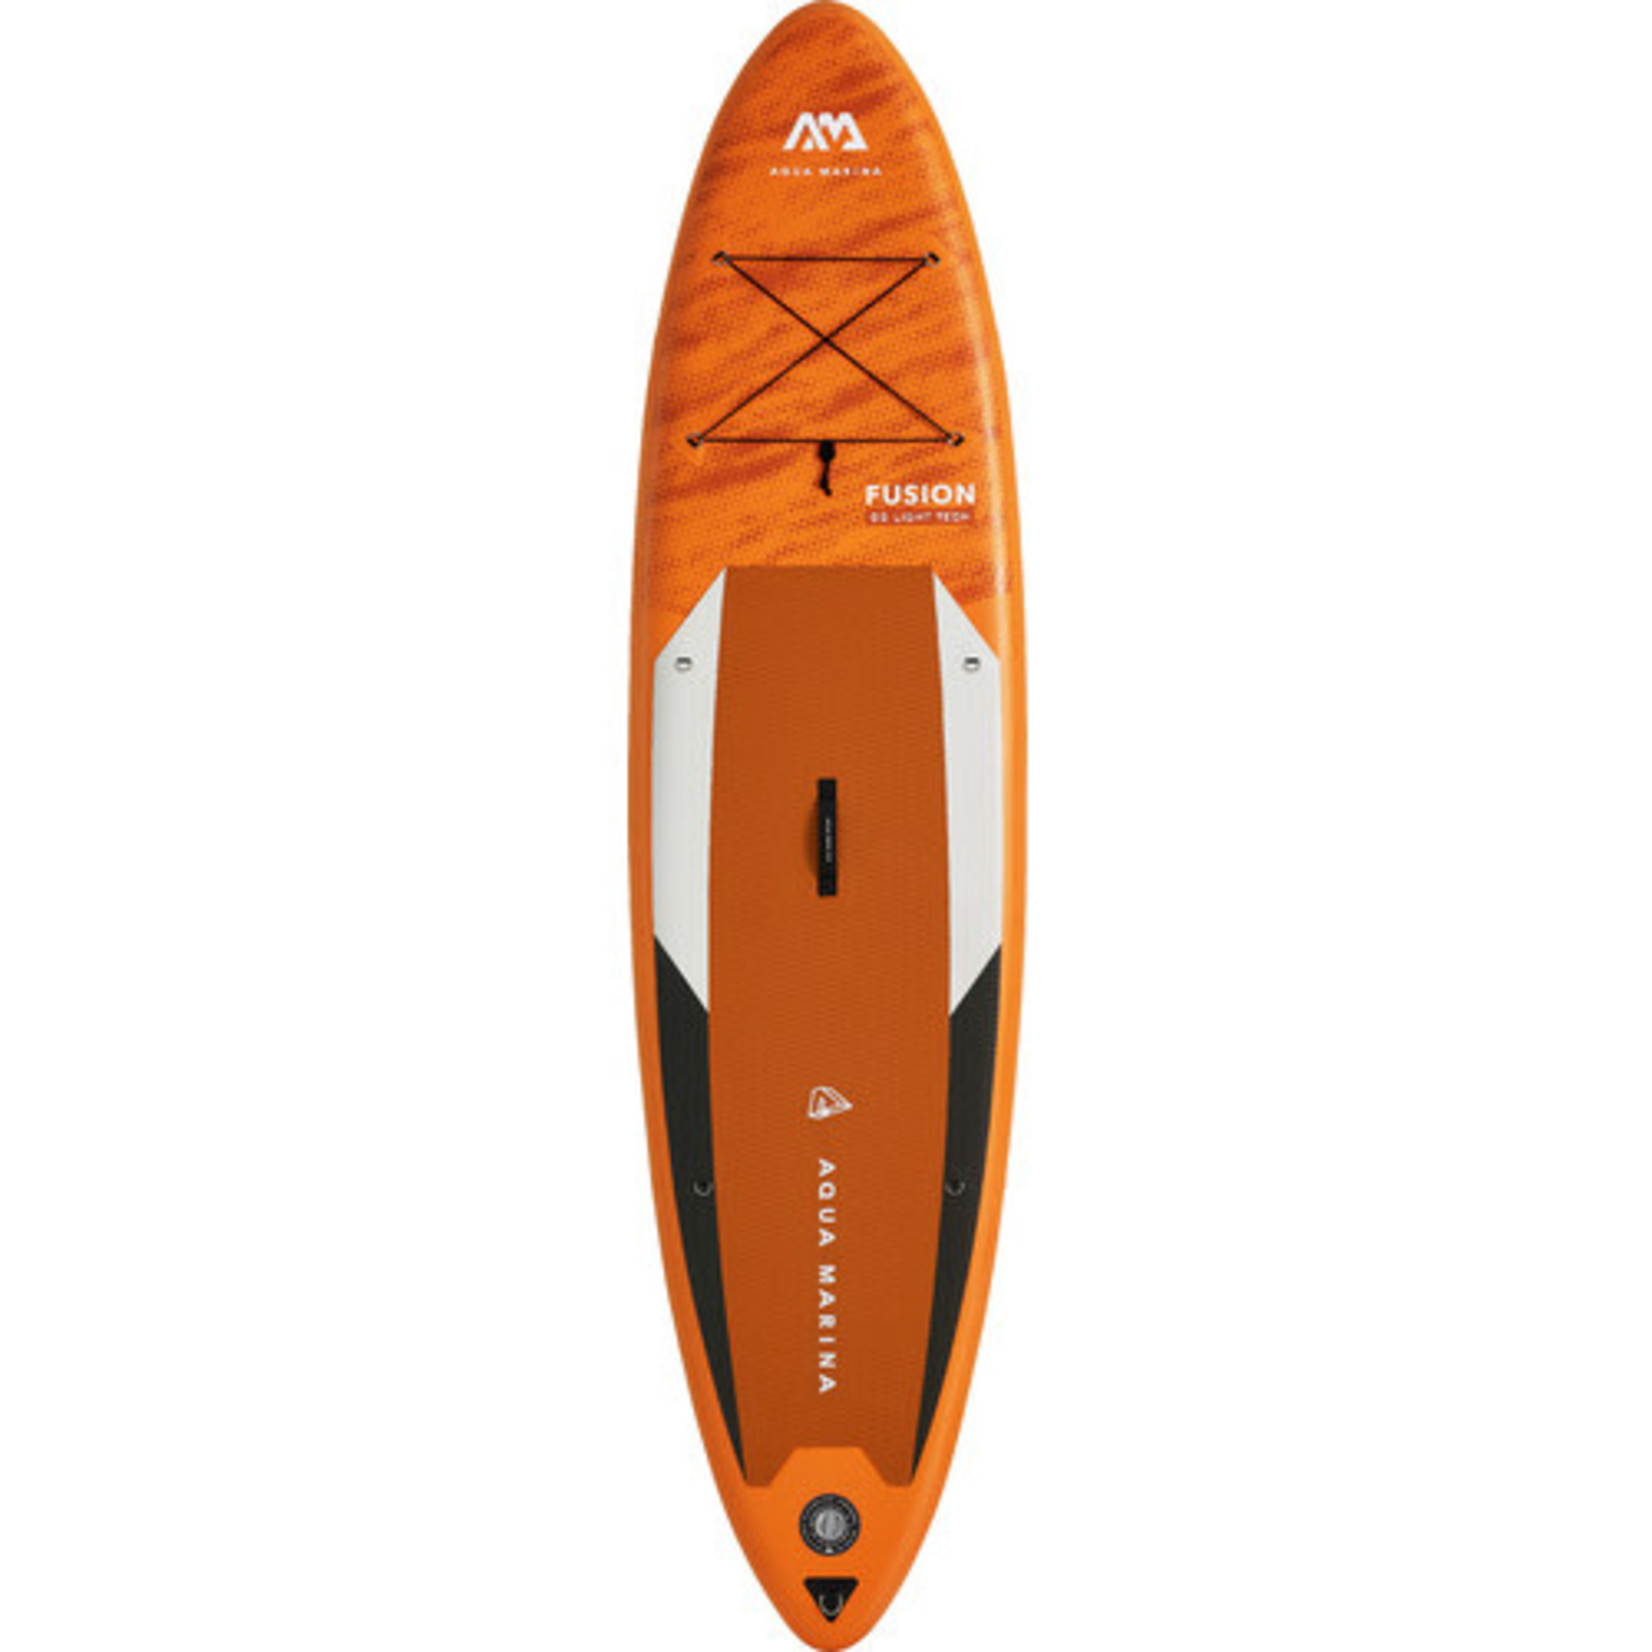 AQUAMARINA FUSION Inflatable Stand Up Paddleboard - 10'10 "X32" X6 "